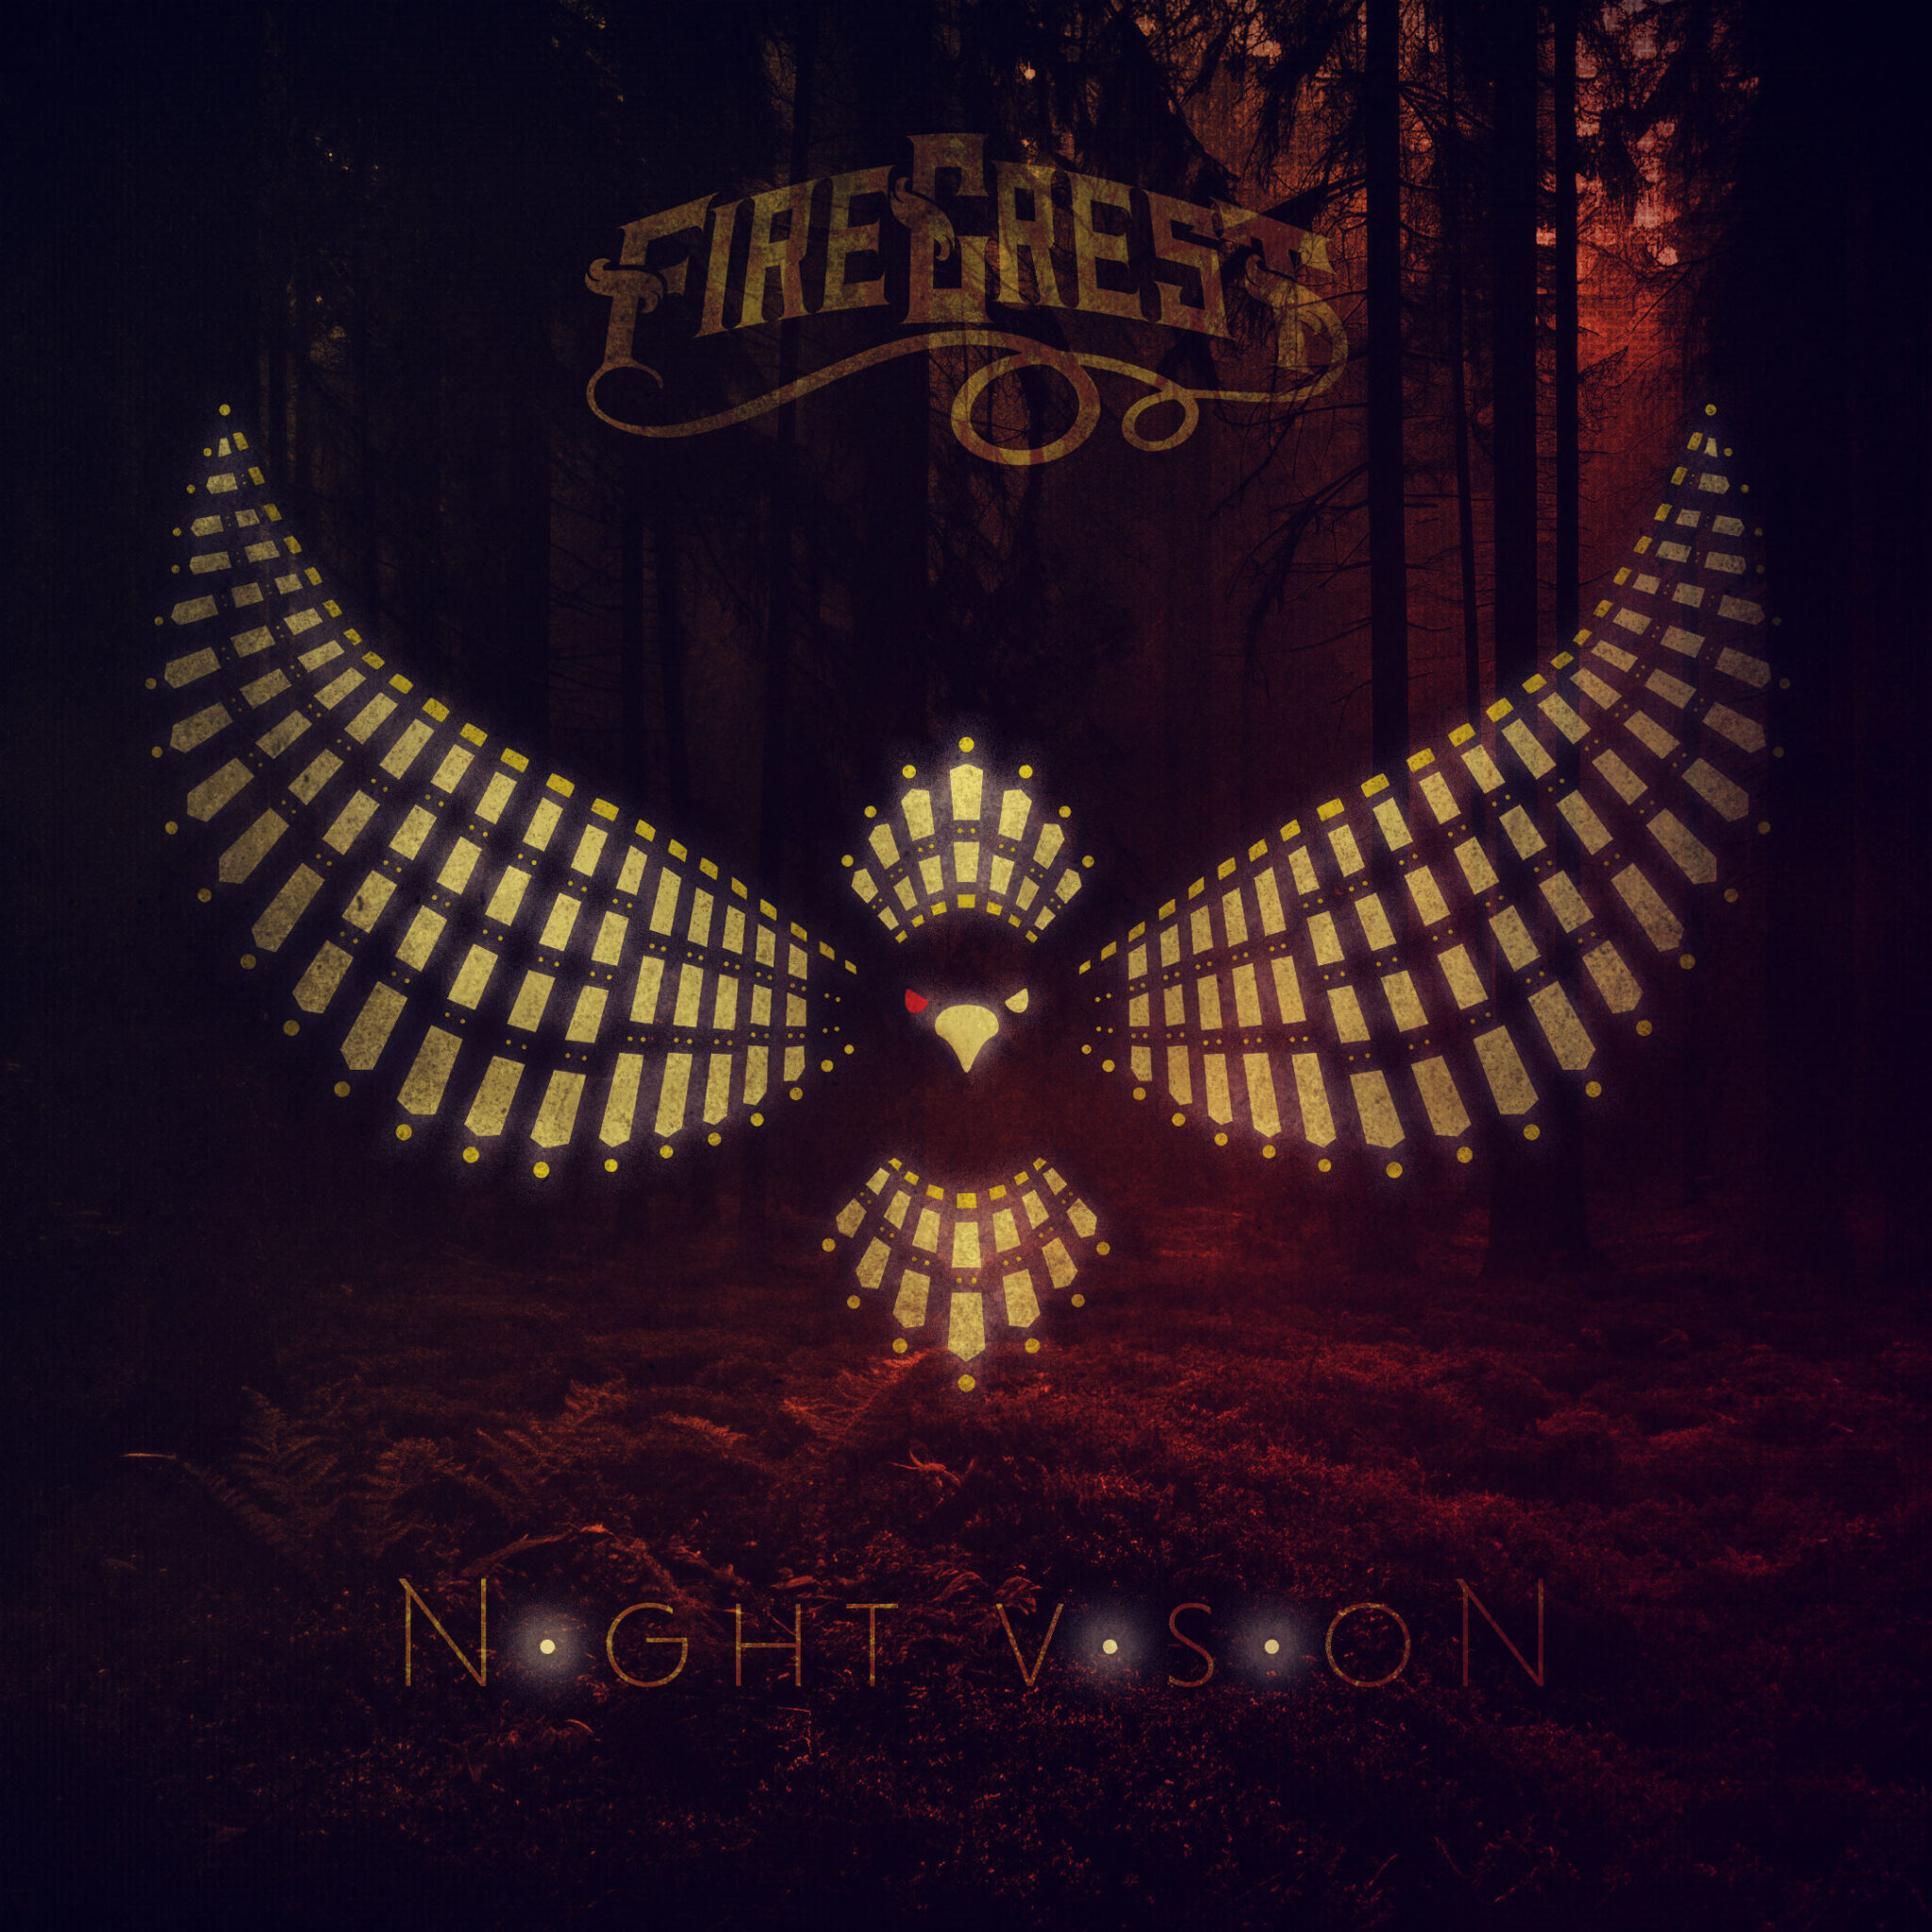 Firecrest - Night Vision